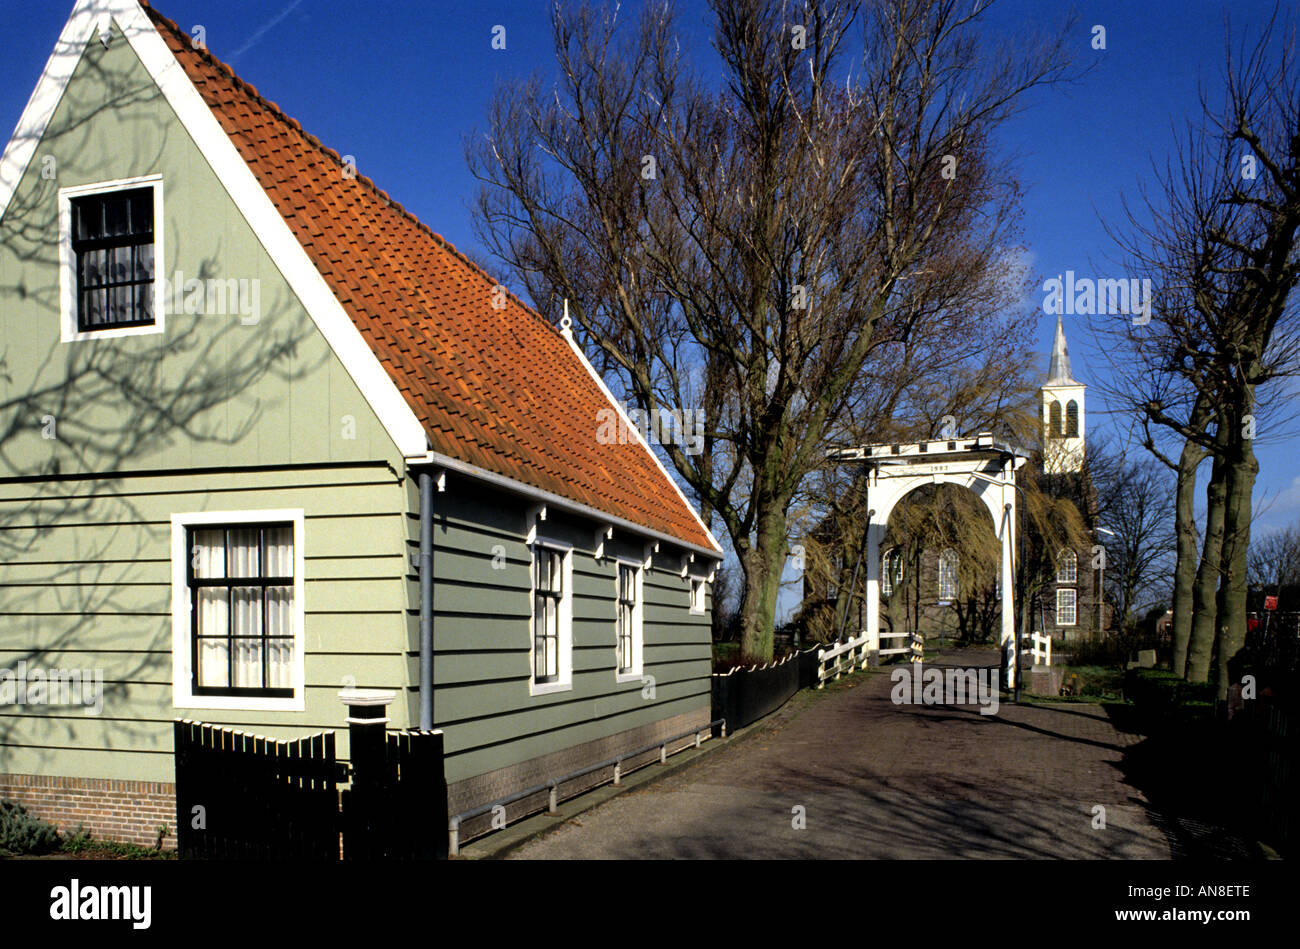 Broek in Waterland Netherlands Holland Historic Stock Photo